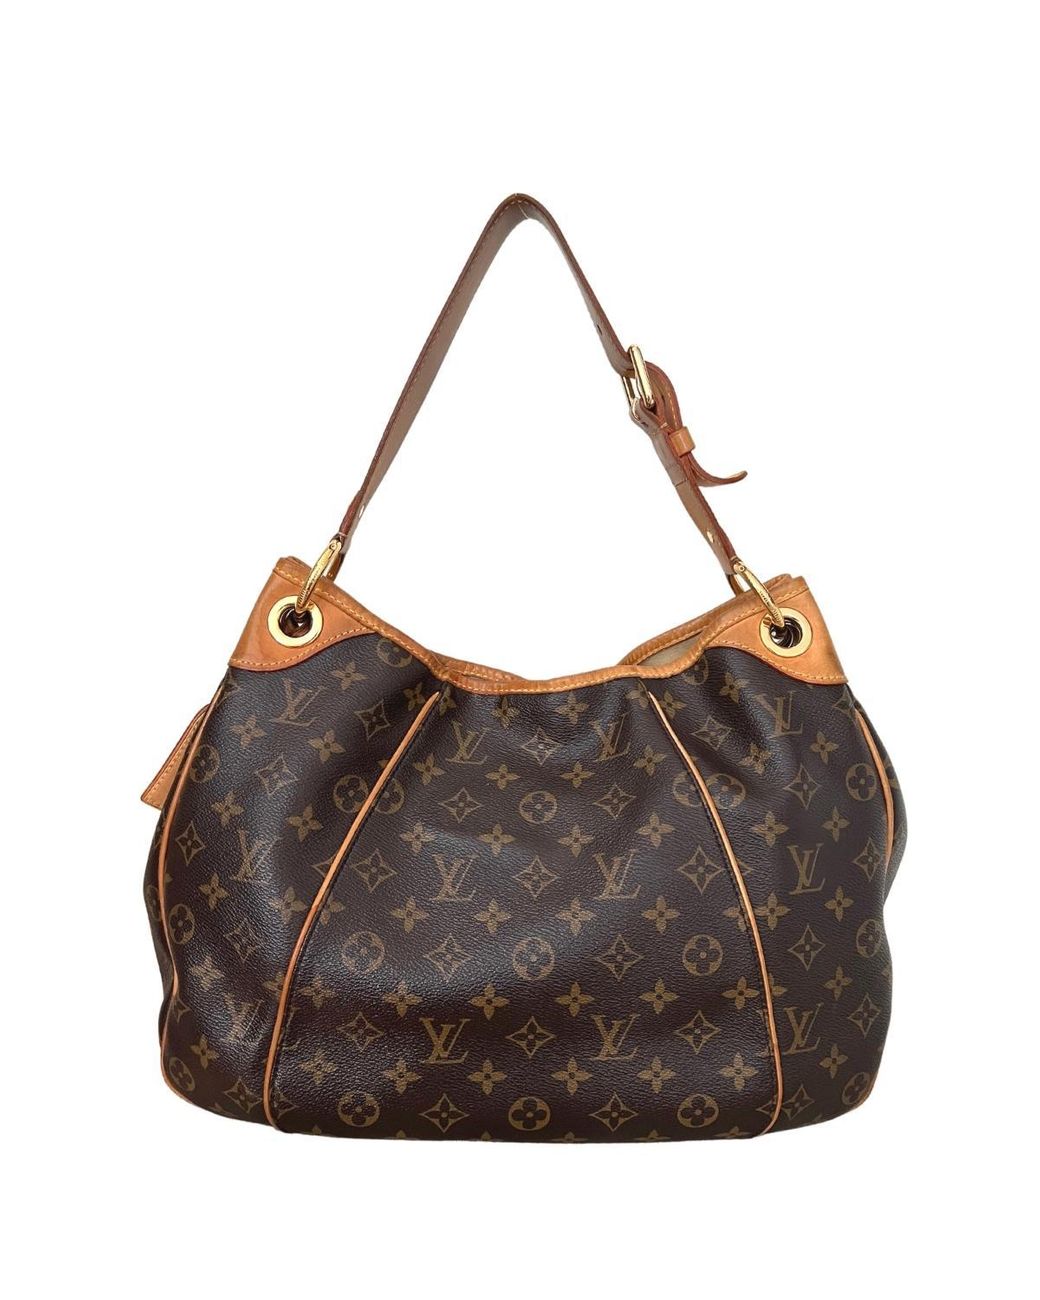 Louis Vuitton Galliera Bag